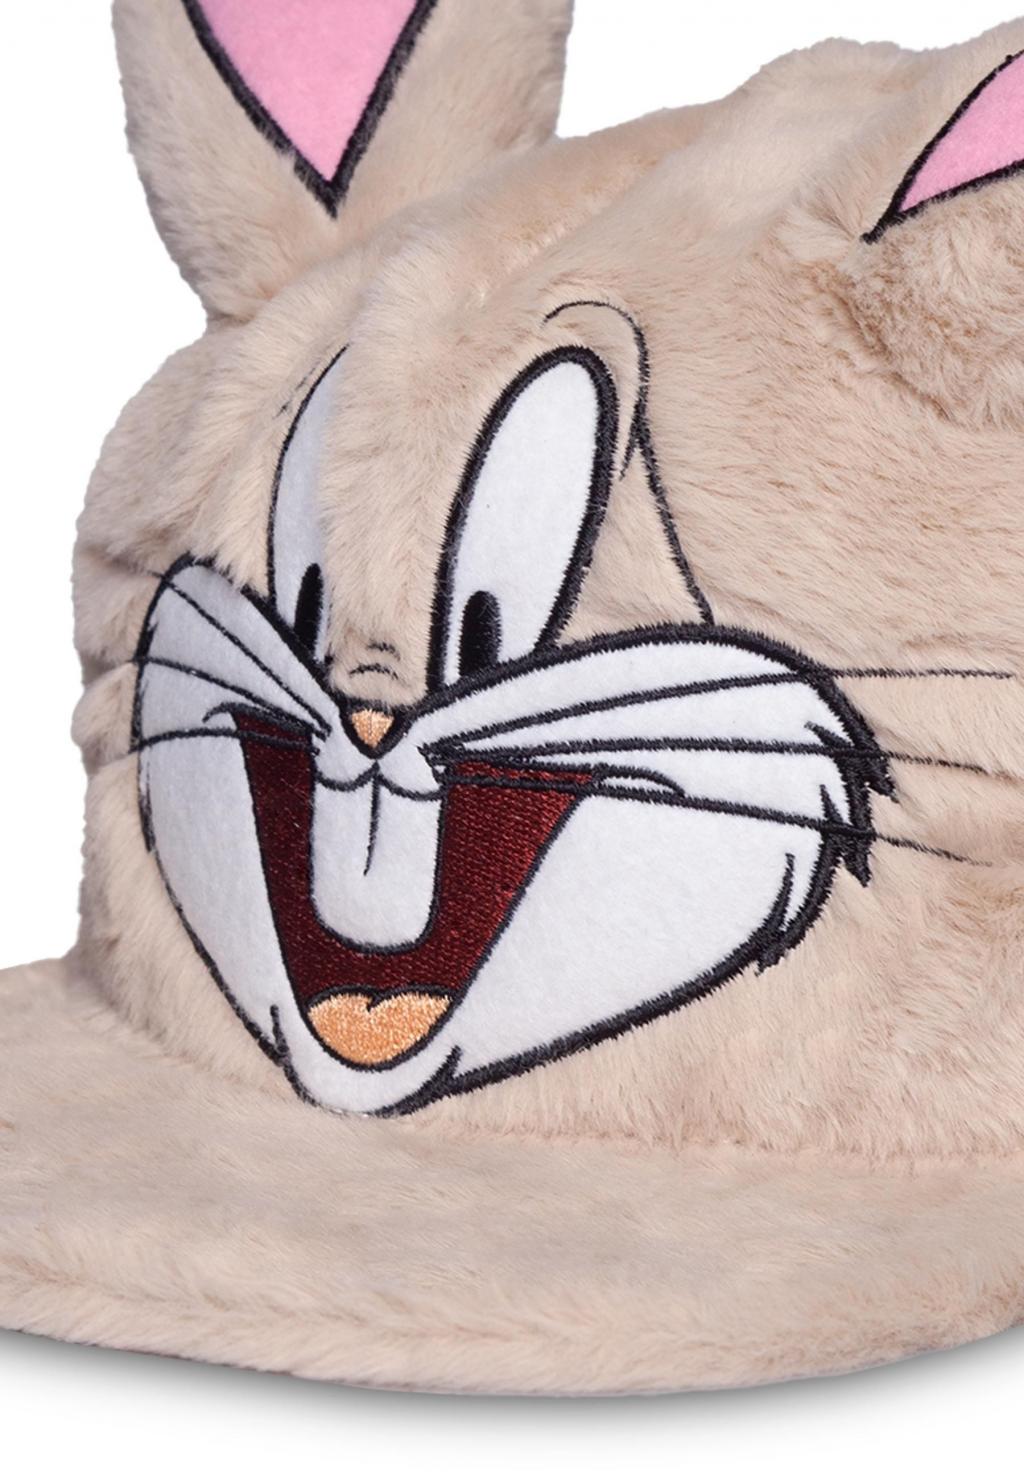 LOONEY TUNES - Bugs Bunny - Novelty Cap